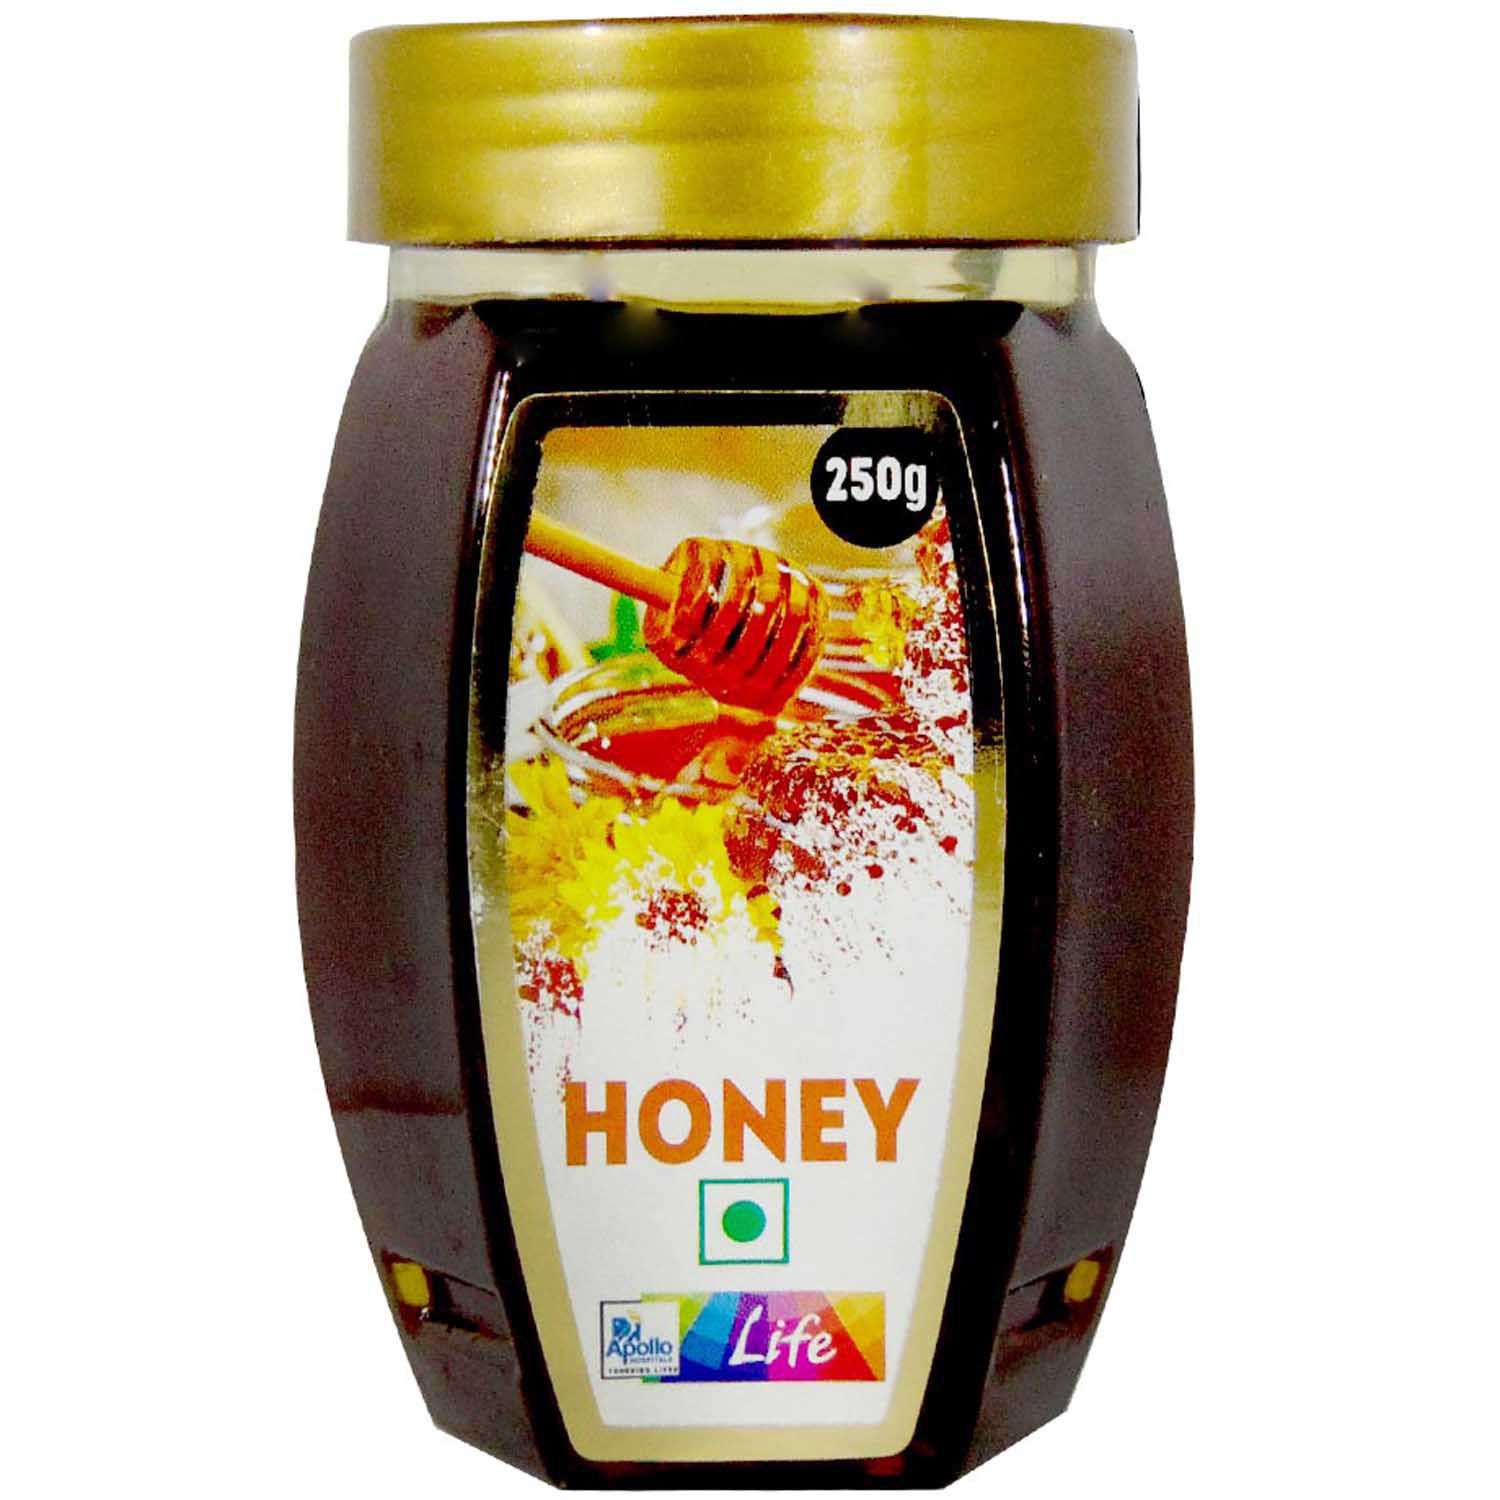 Apollo Life Honey, 250 gm, Pack of 1 